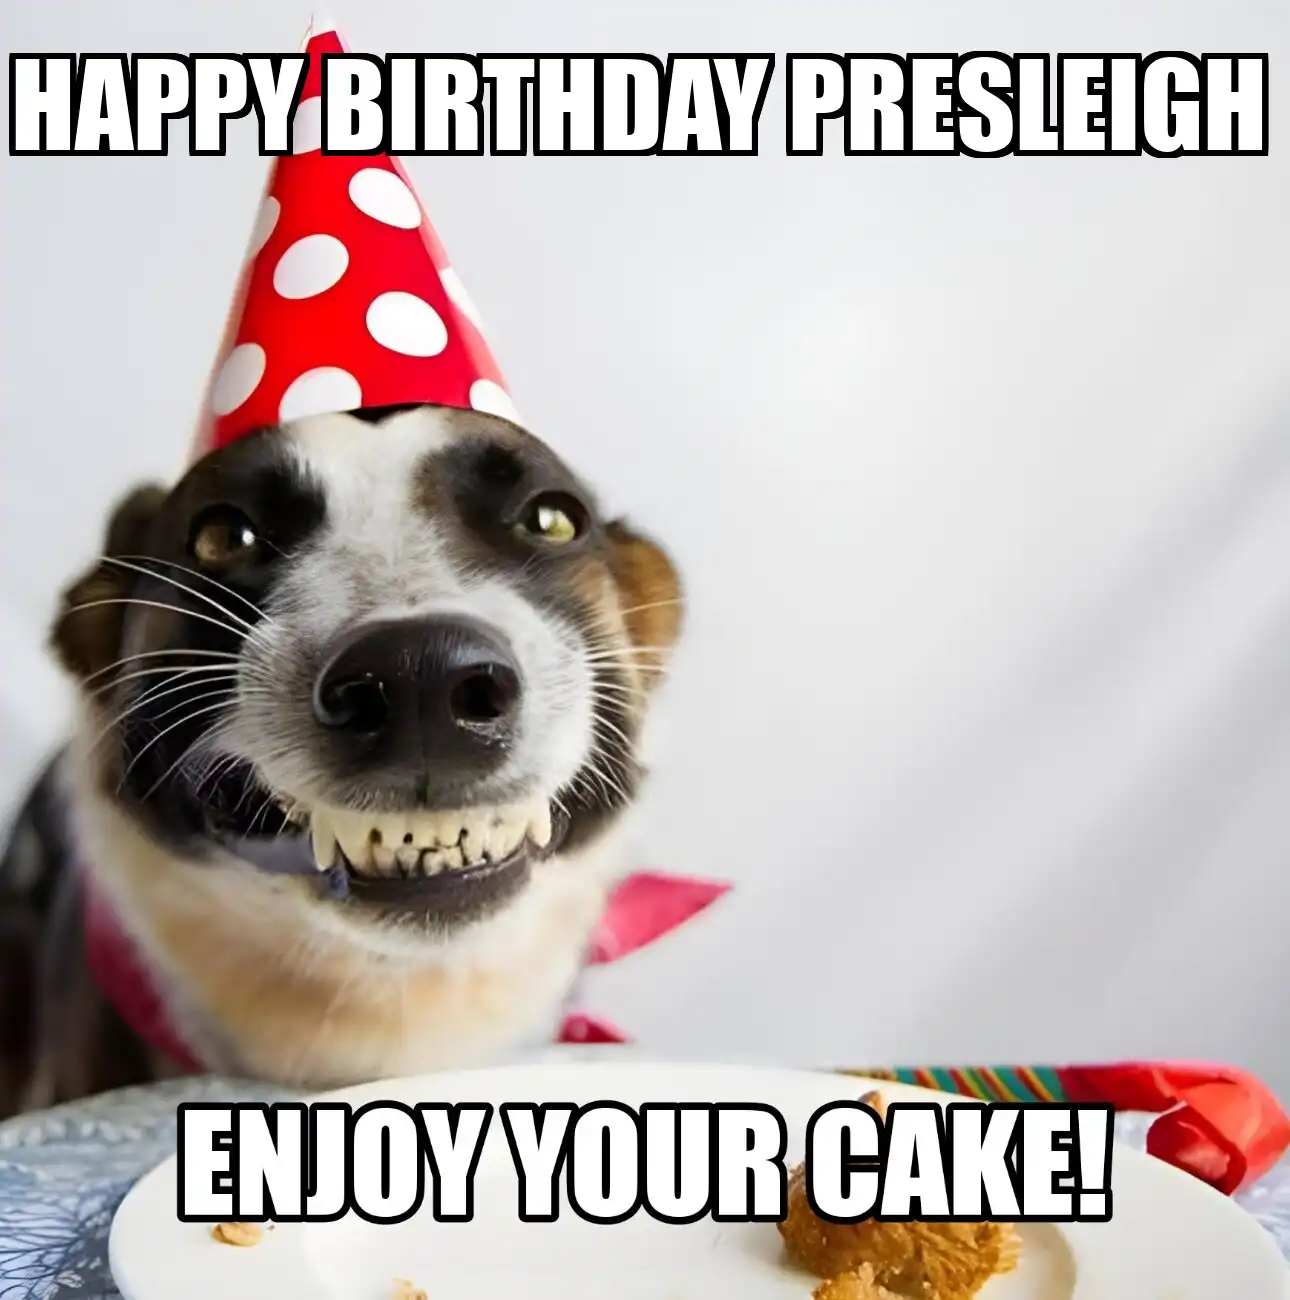 Happy Birthday Presleigh Enjoy Your Cake Dog Meme